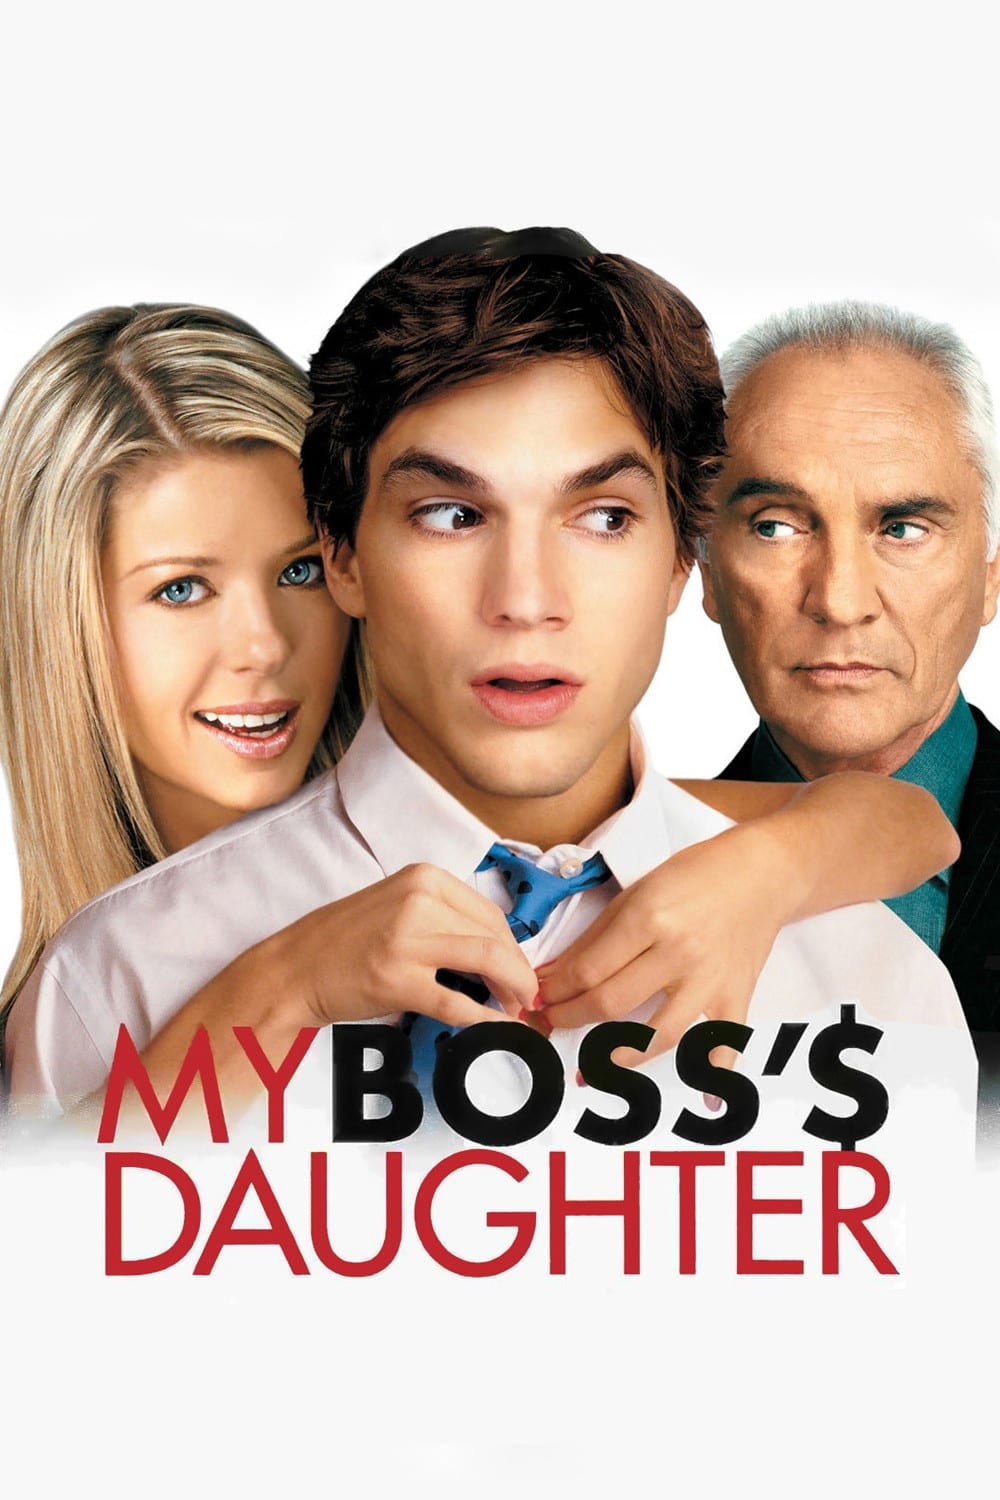 My Boss's Daughter (2003)